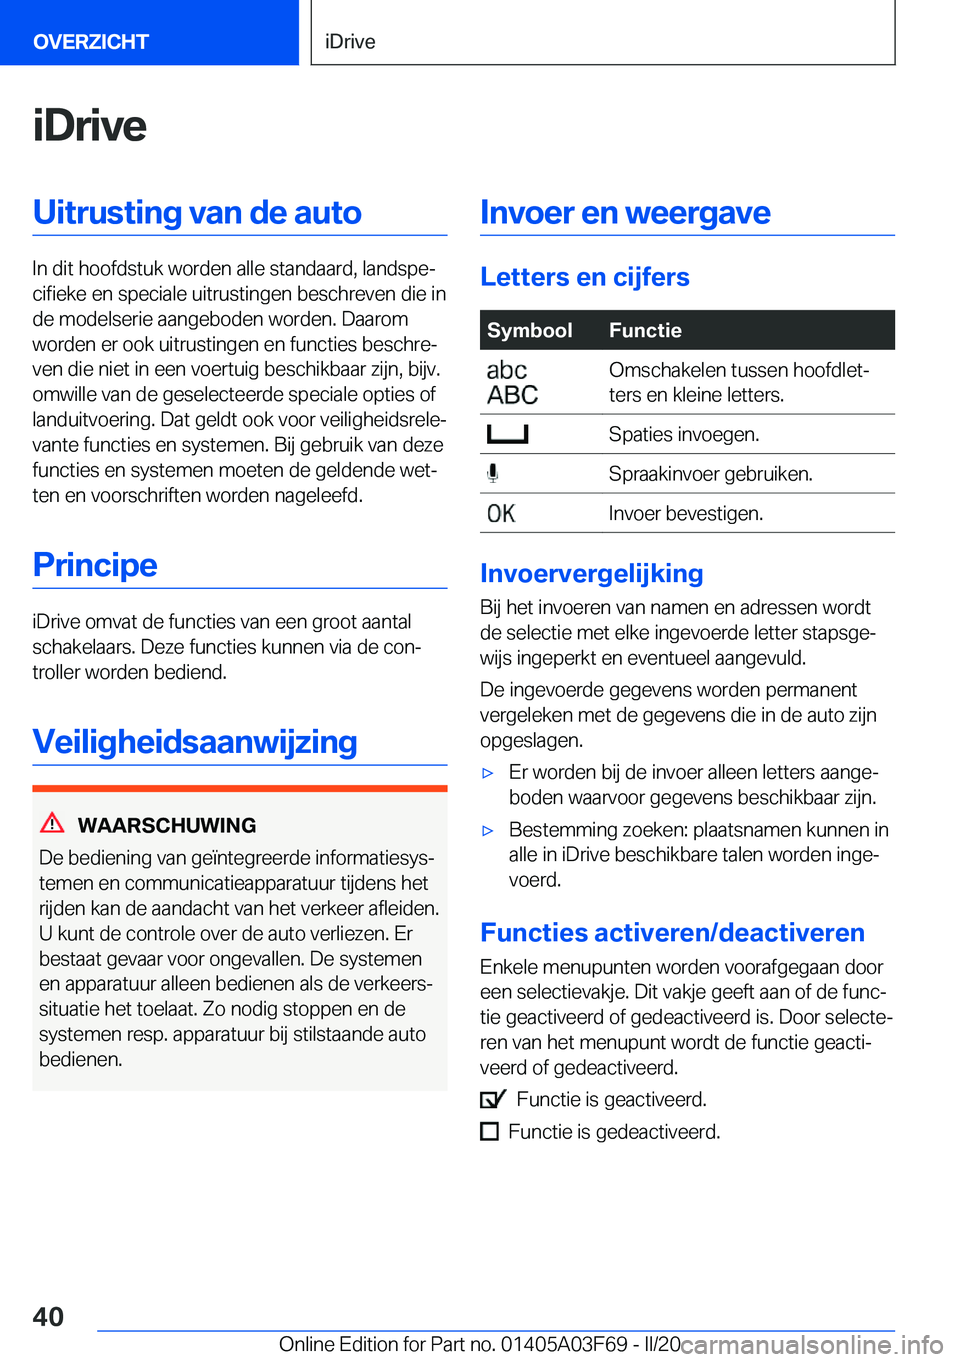 BMW 3 SERIES 2020  Instructieboekjes (in Dutch) �i�D�r�i�v�e�U�i�t�r�u�s�t�i�n�g��v�a�n��d�e��a�u�t�o
�I�n��d�i�t��h�o�o�f�d�s�t�u�k��w�o�r�d�e�n��a�l�l�e��s�t�a�n�d�a�a�r�d�,��l�a�n�d�s�p�ej�c�i�f�i�e�k�e��e�n��s�p�e�c�i�a�l�e��u�i�t�